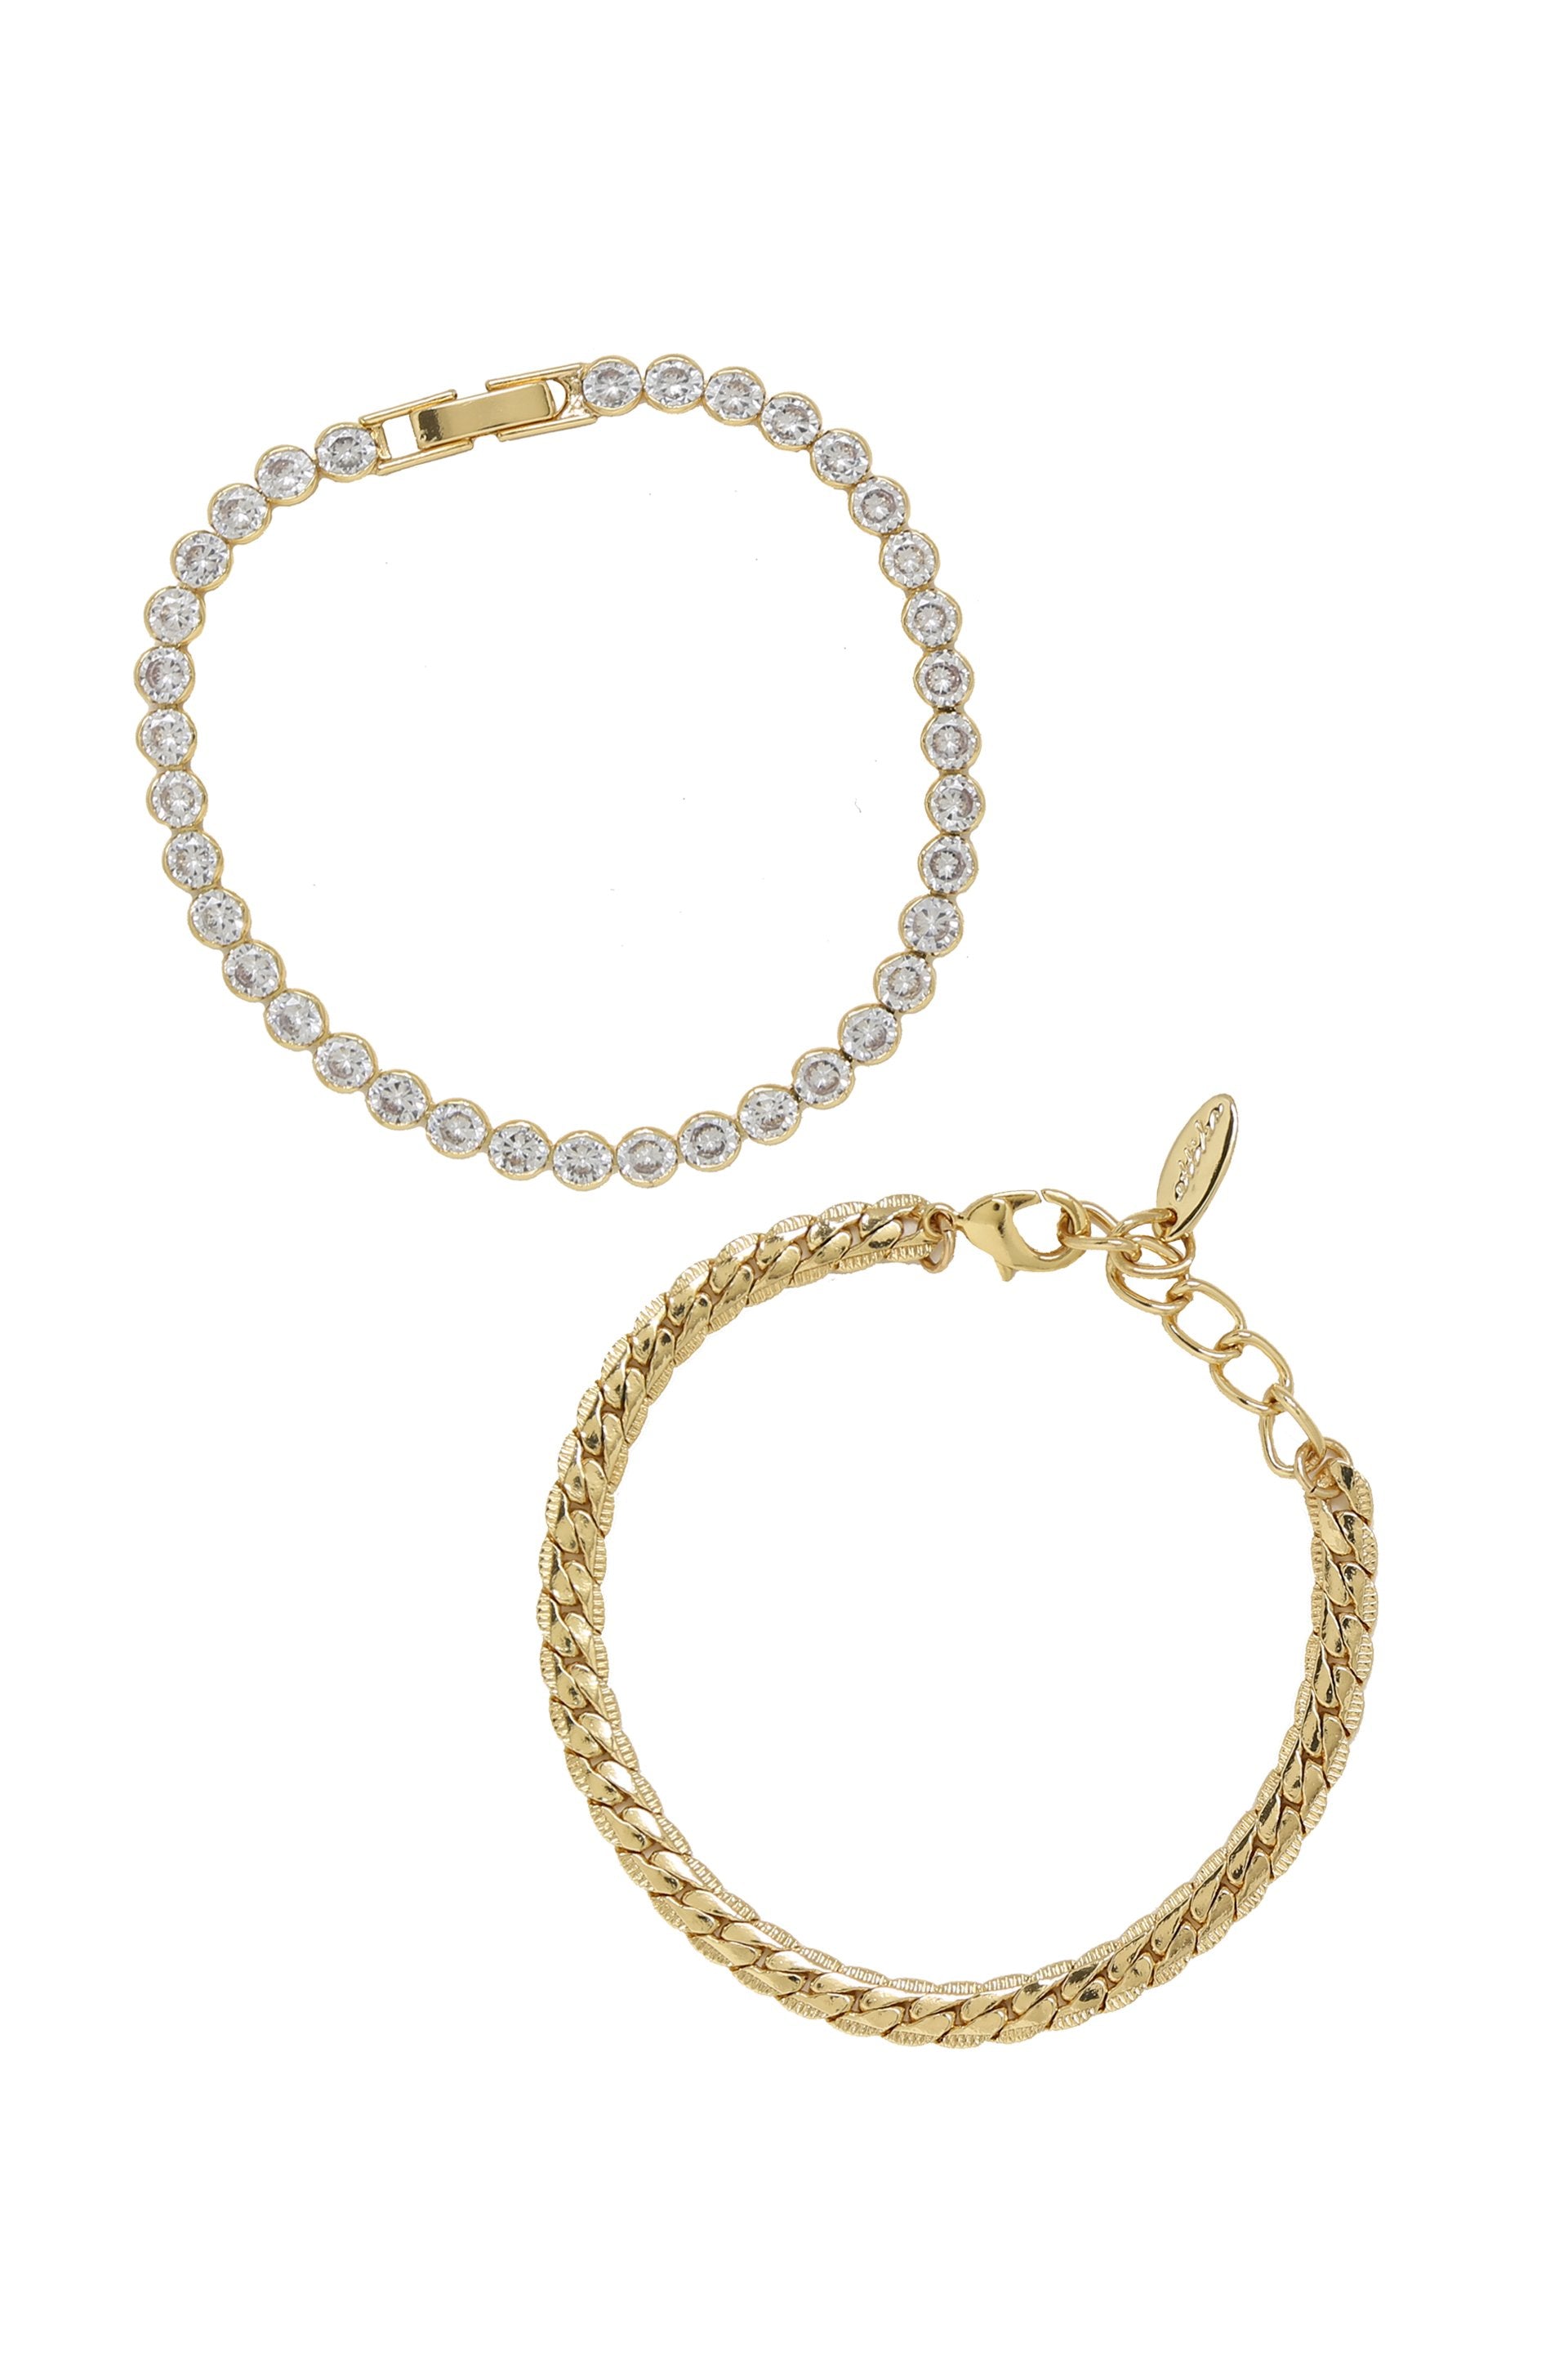 Crystal Chain & 18k Gold Plated Link Bracelet Set on white background  